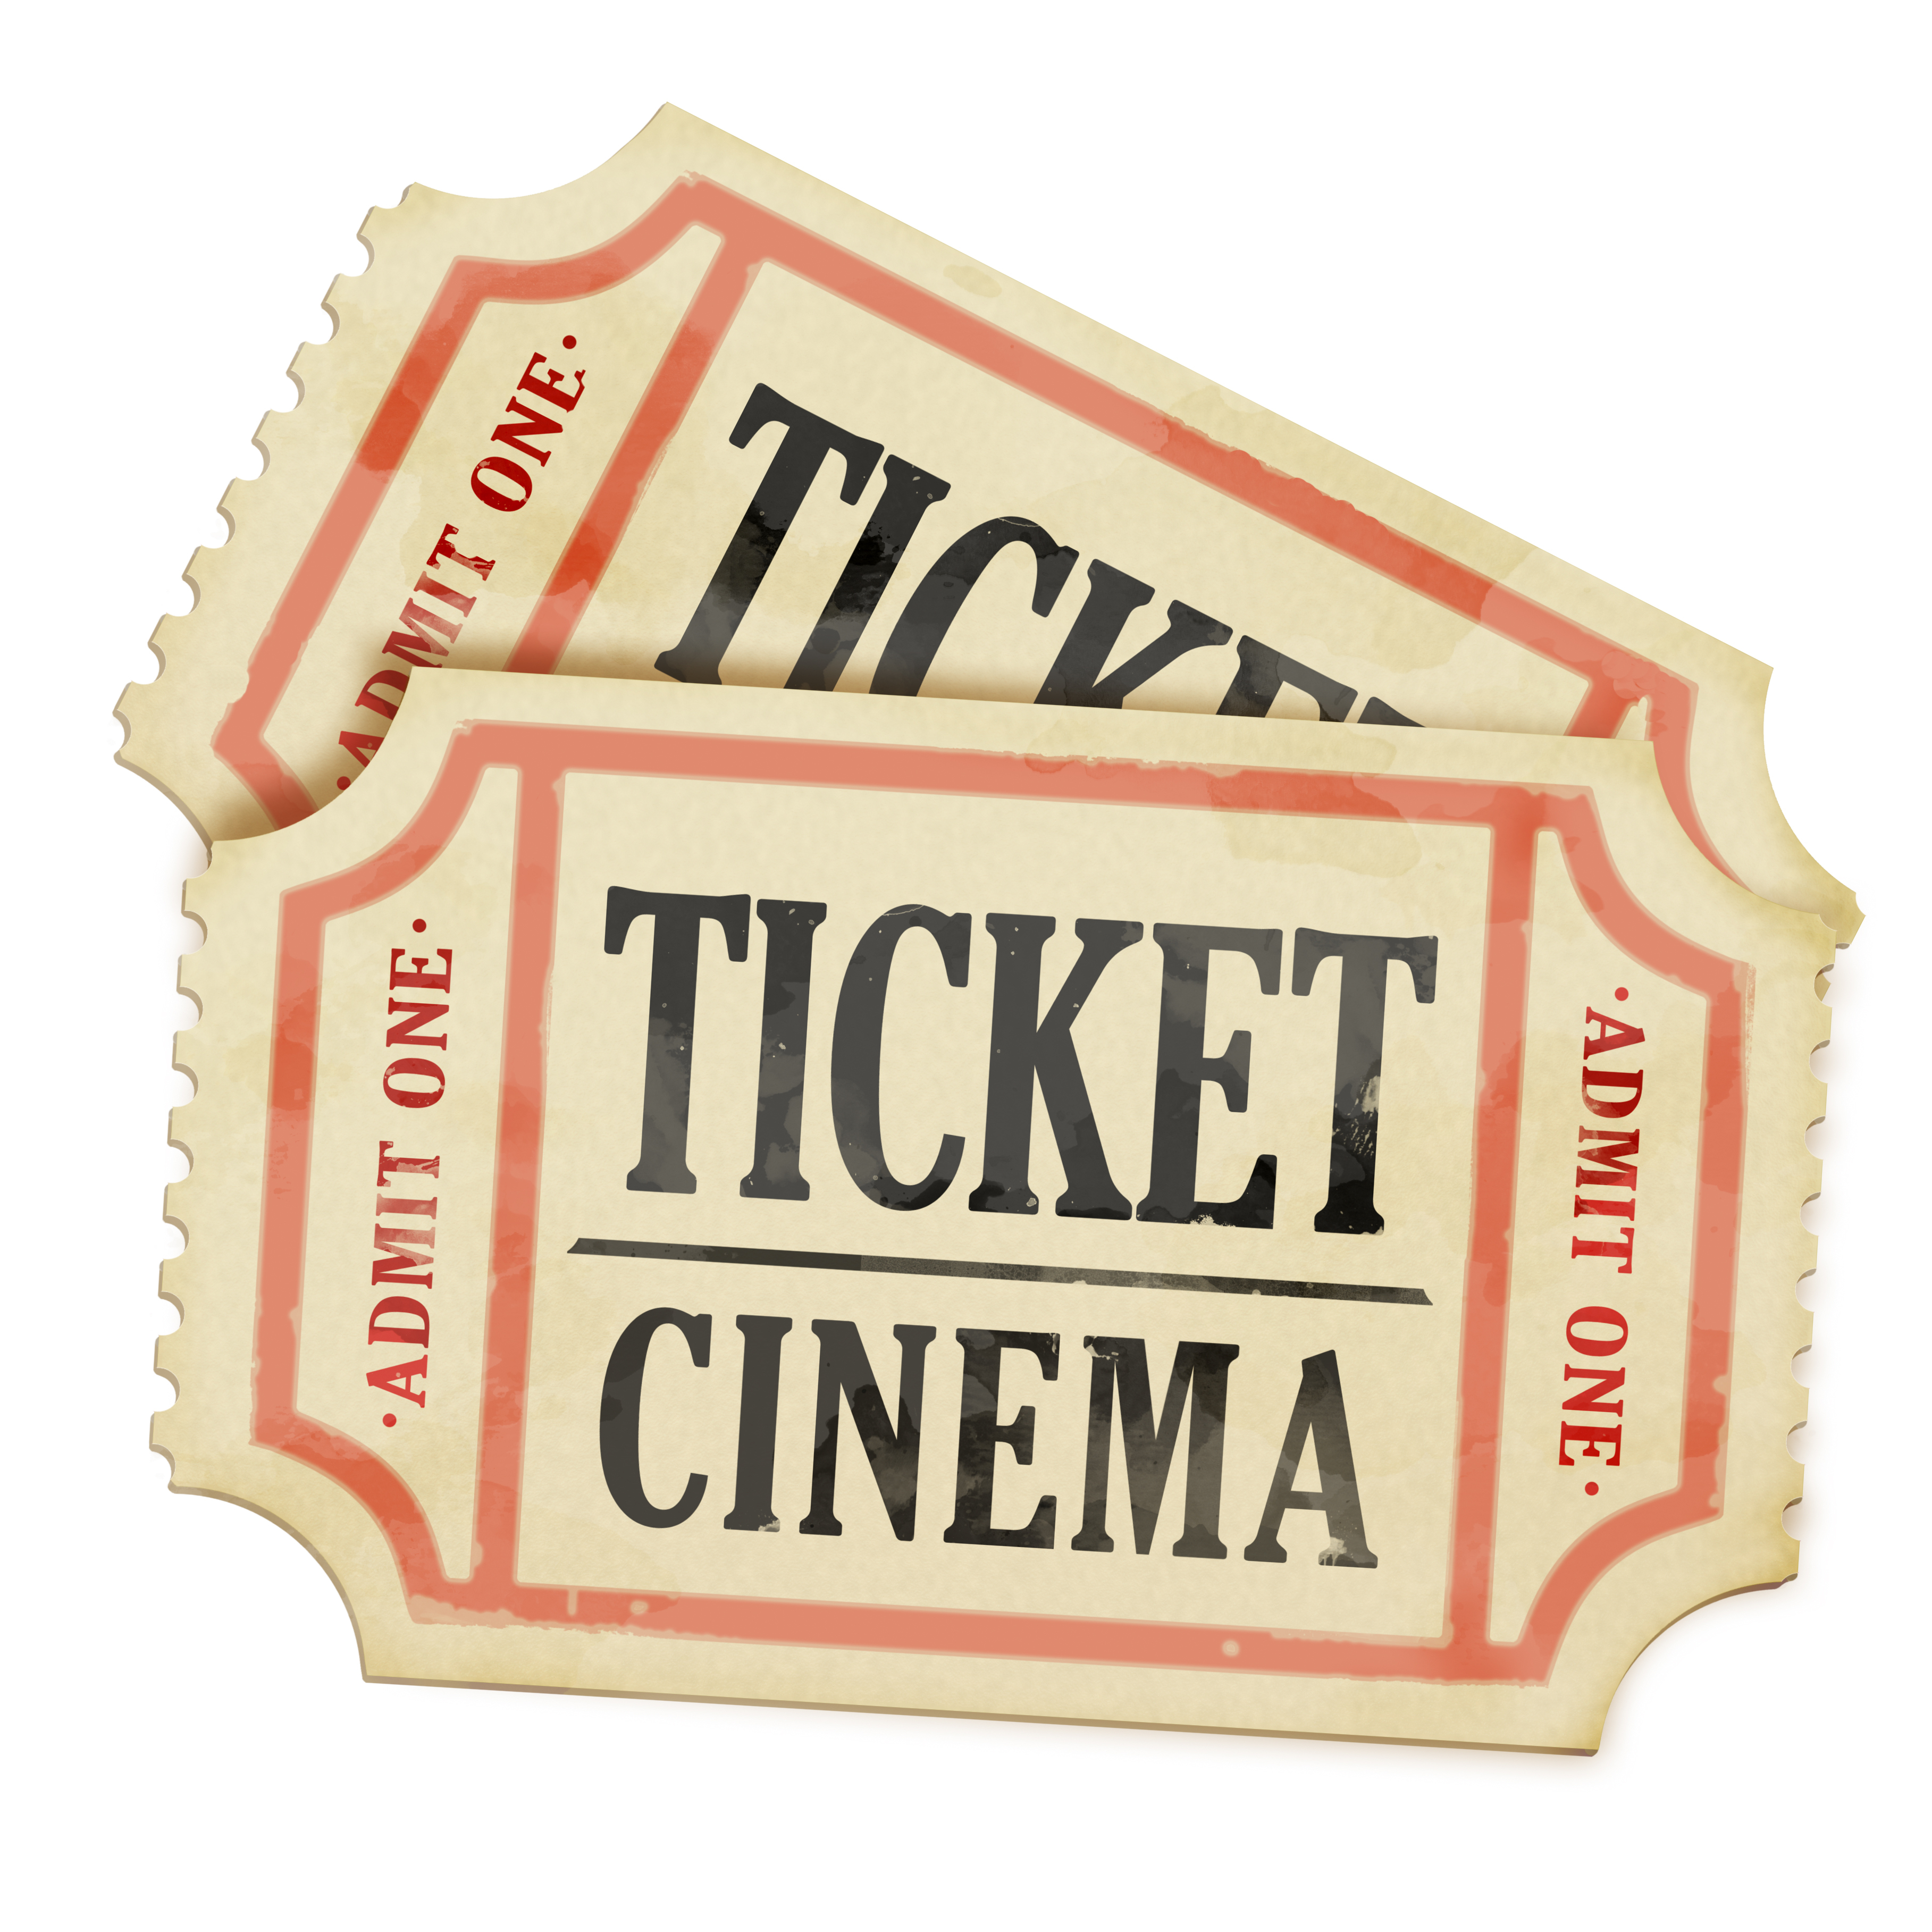 Movie tickets. Photo credit: Shutterstock.com